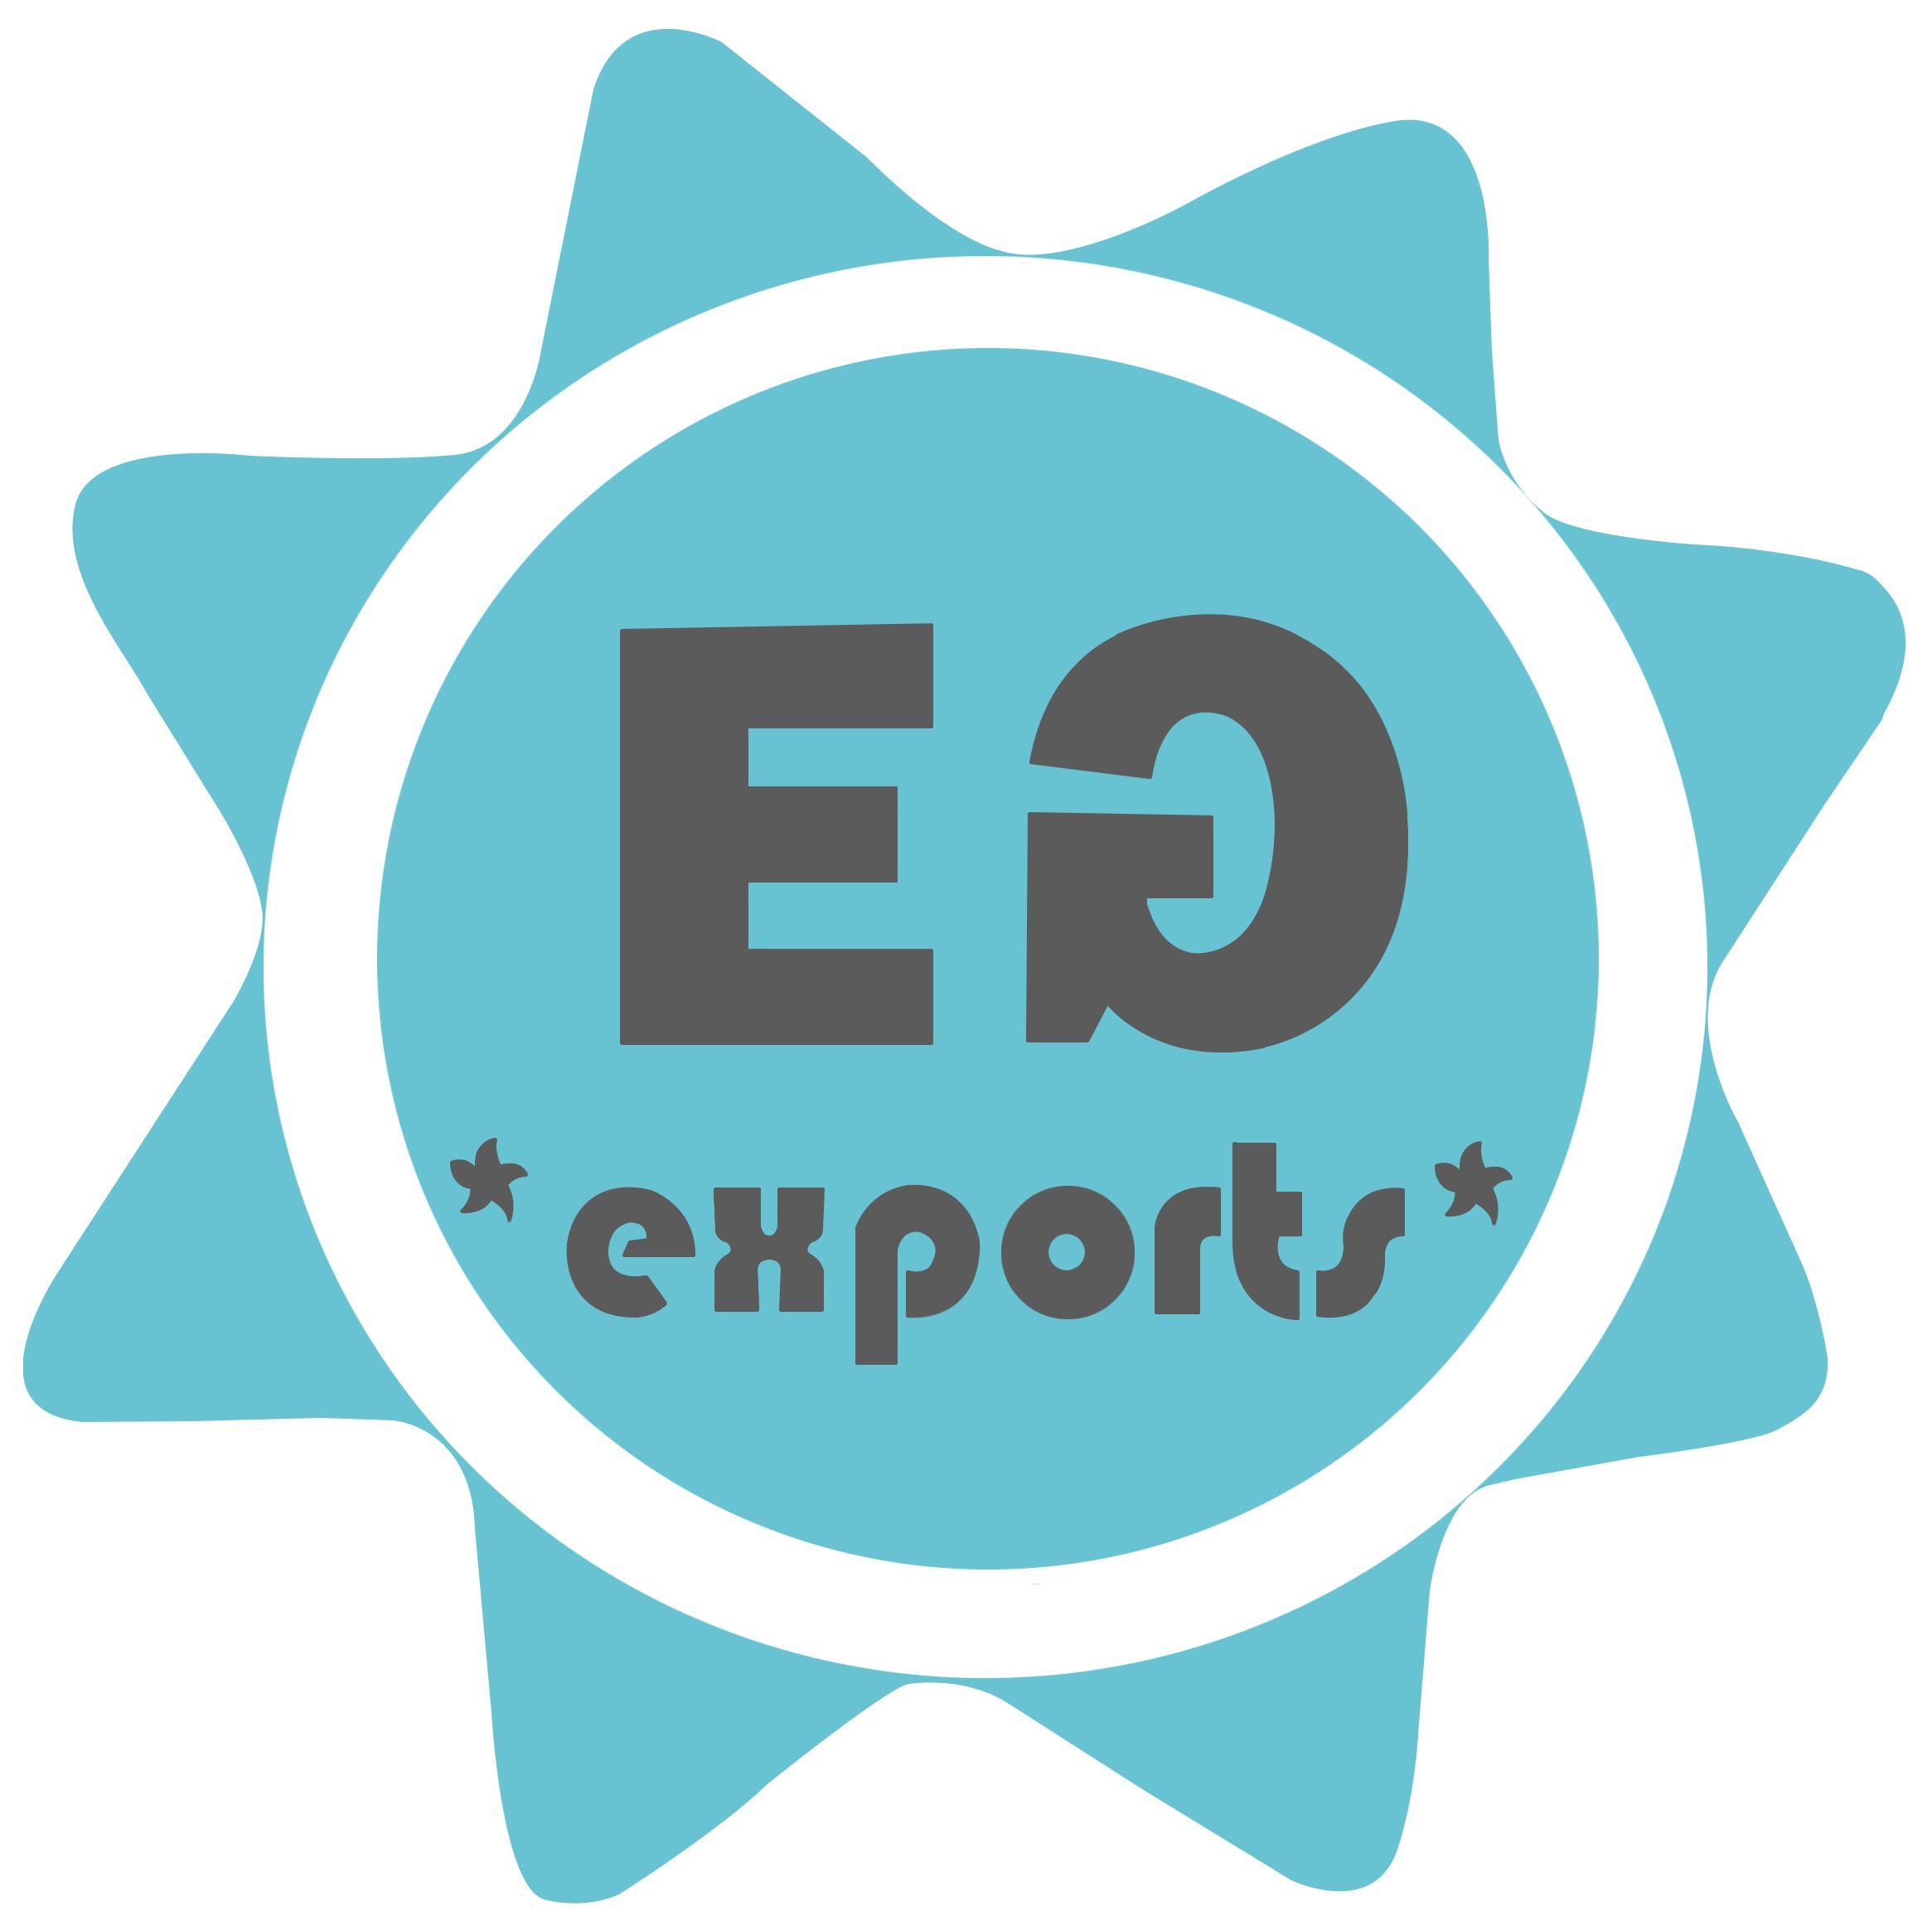 Eden Garden Exports atteint de nouveaux sommets avec Odoo